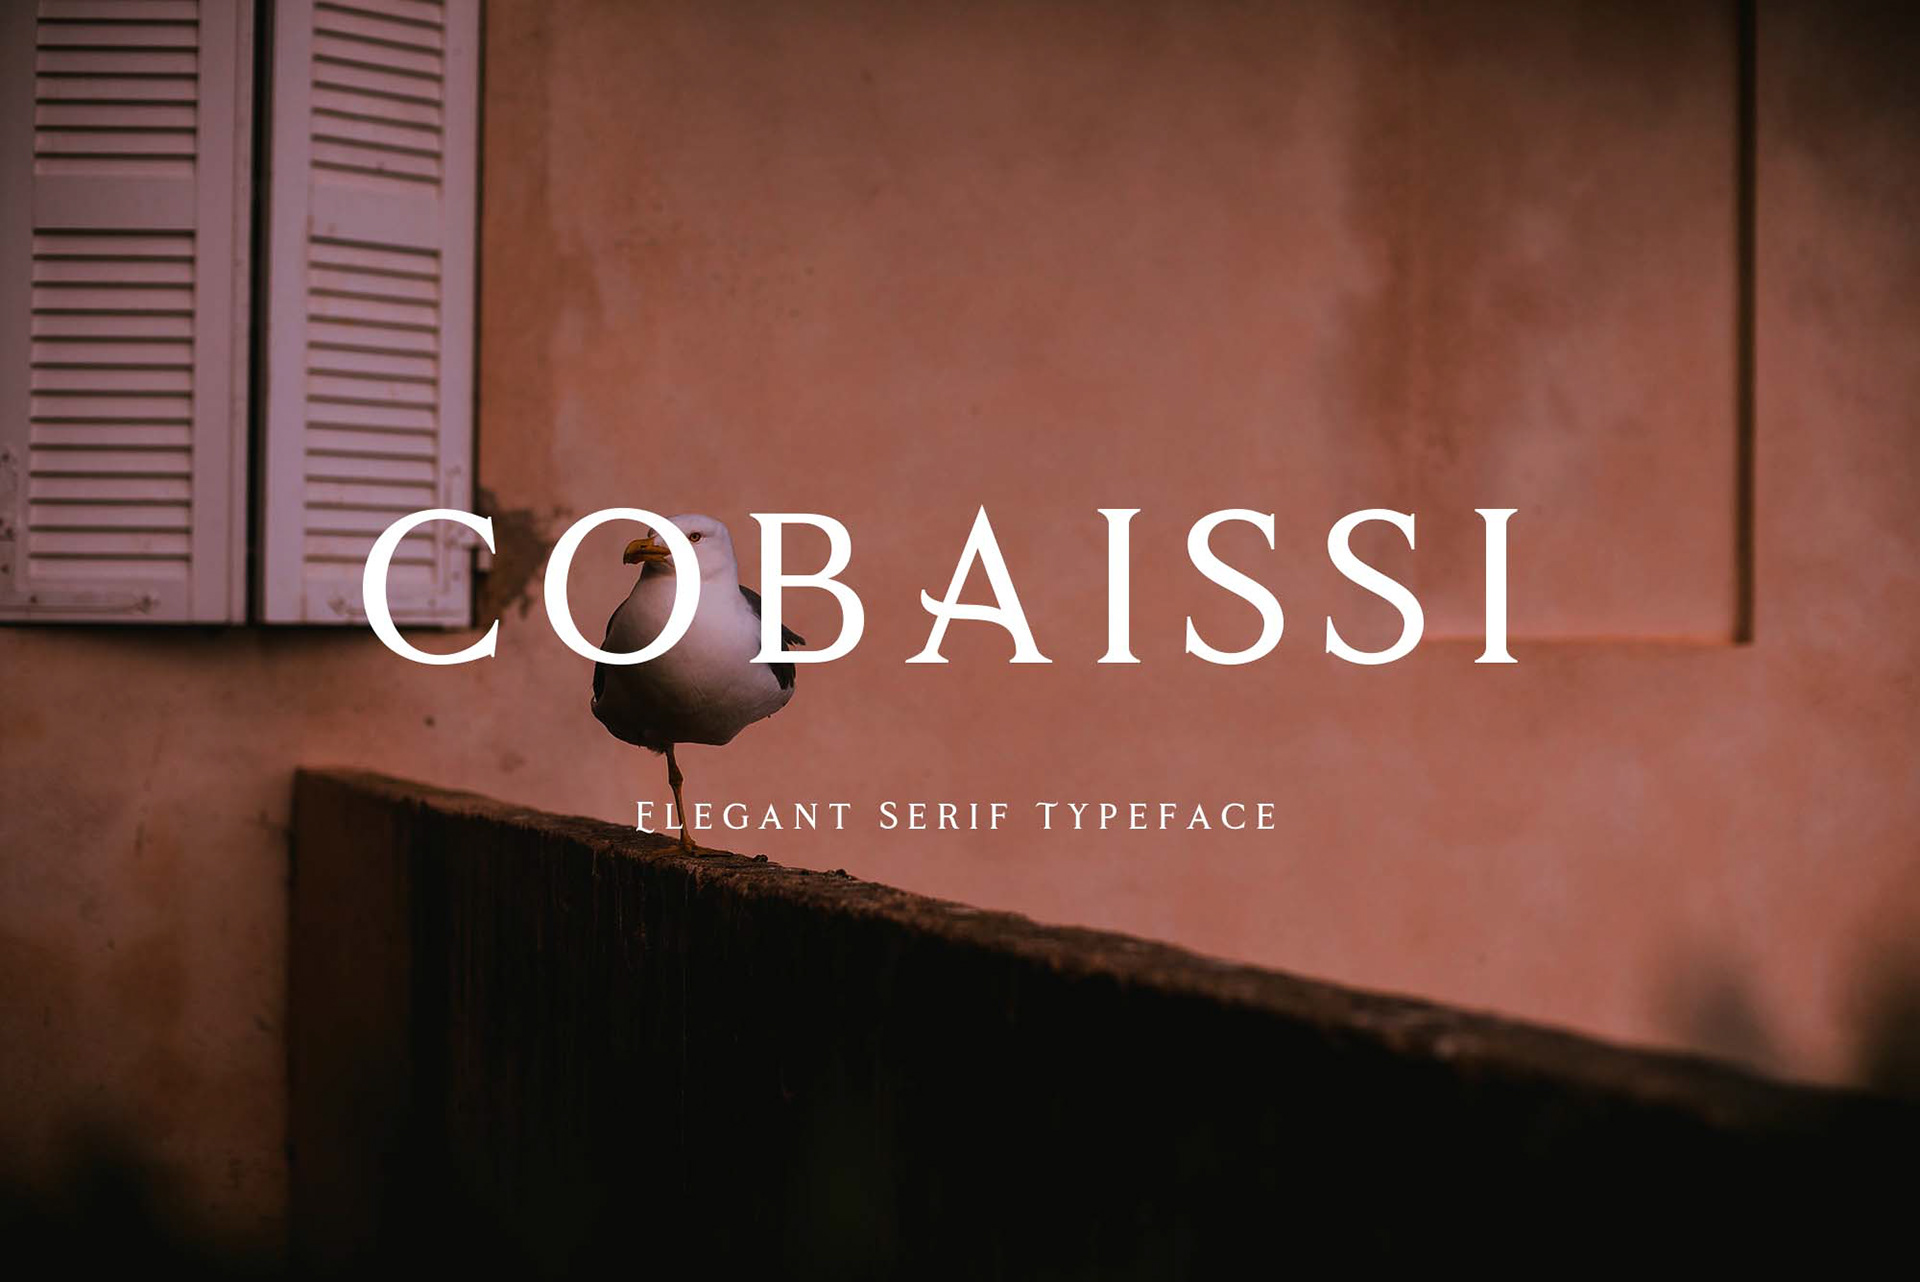 Cobaissi Free Font - serif